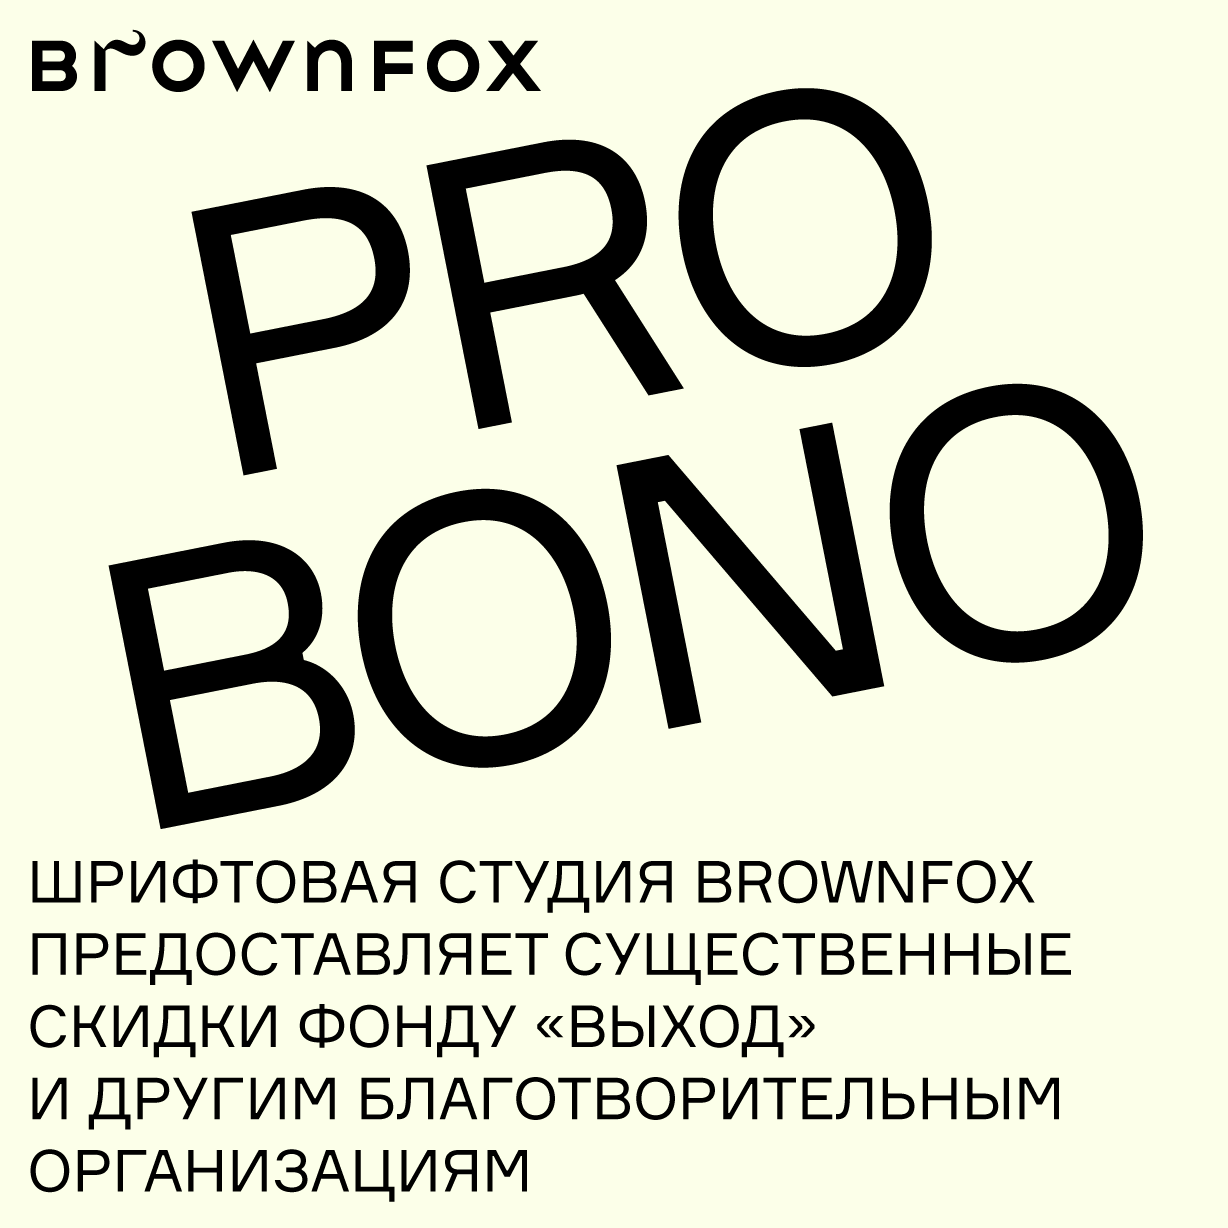 Brownfox